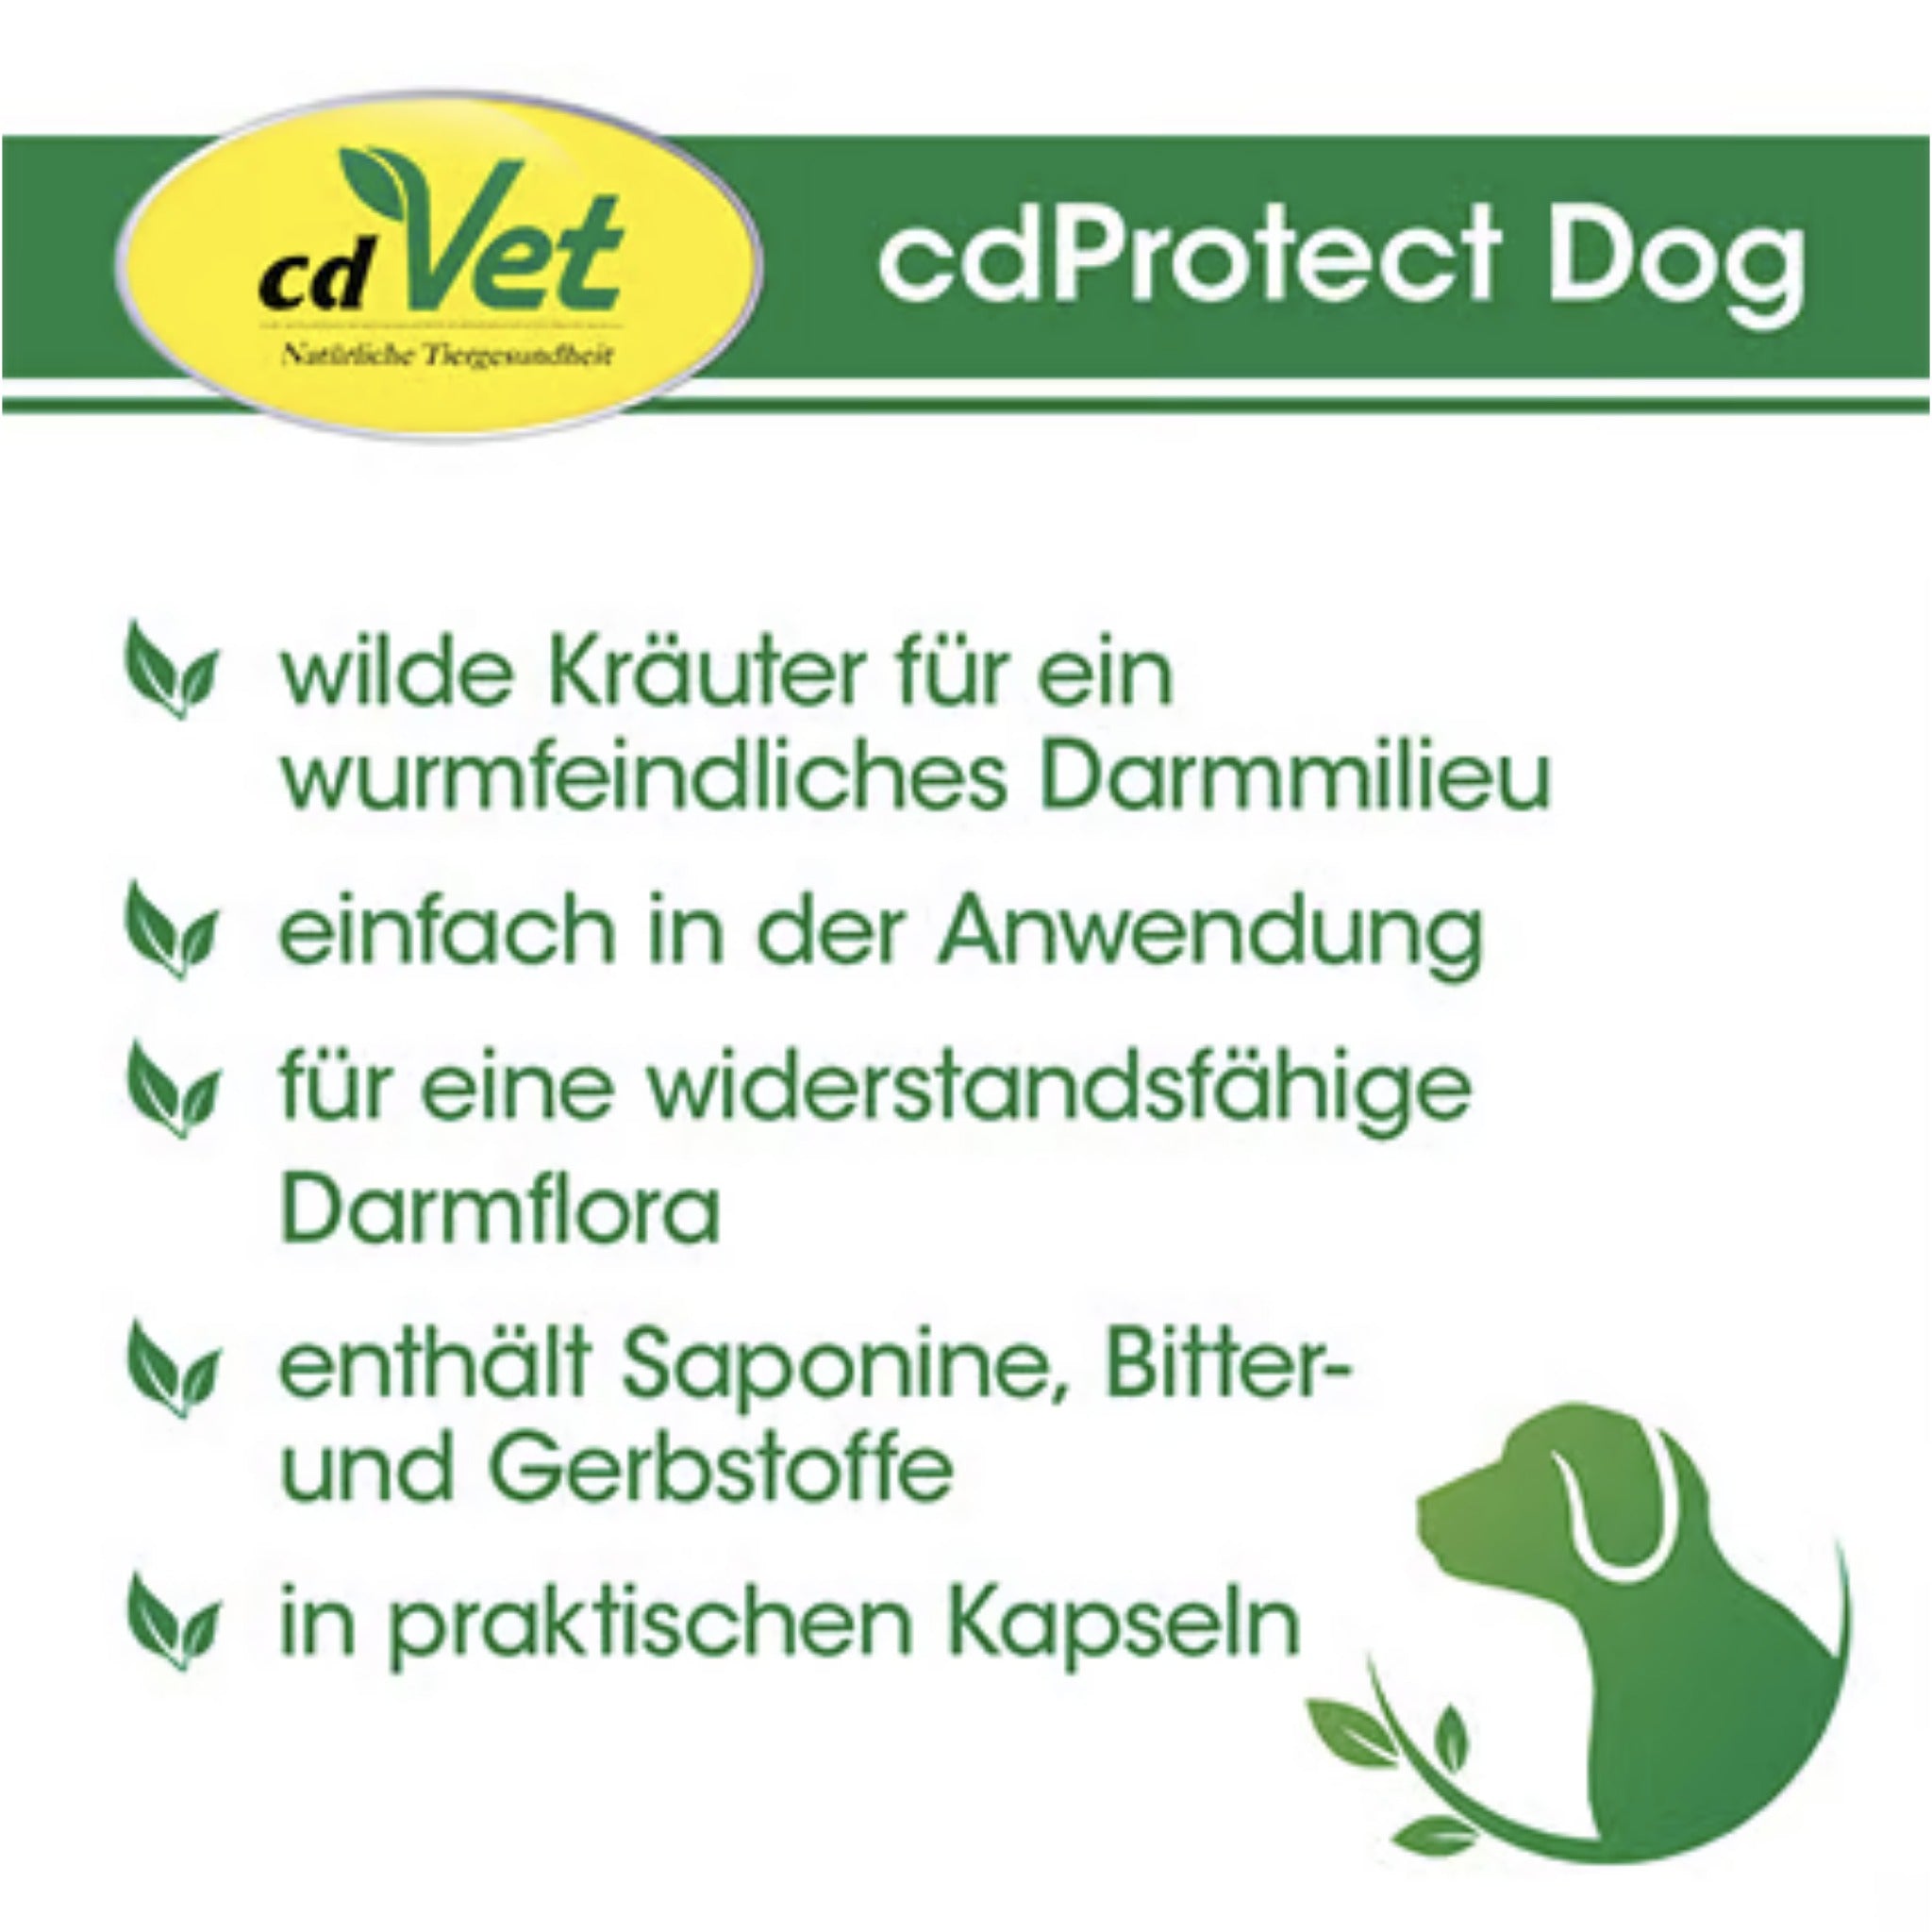 cdVet cdProtect Dog Kapseln für Hunde - Woofshack